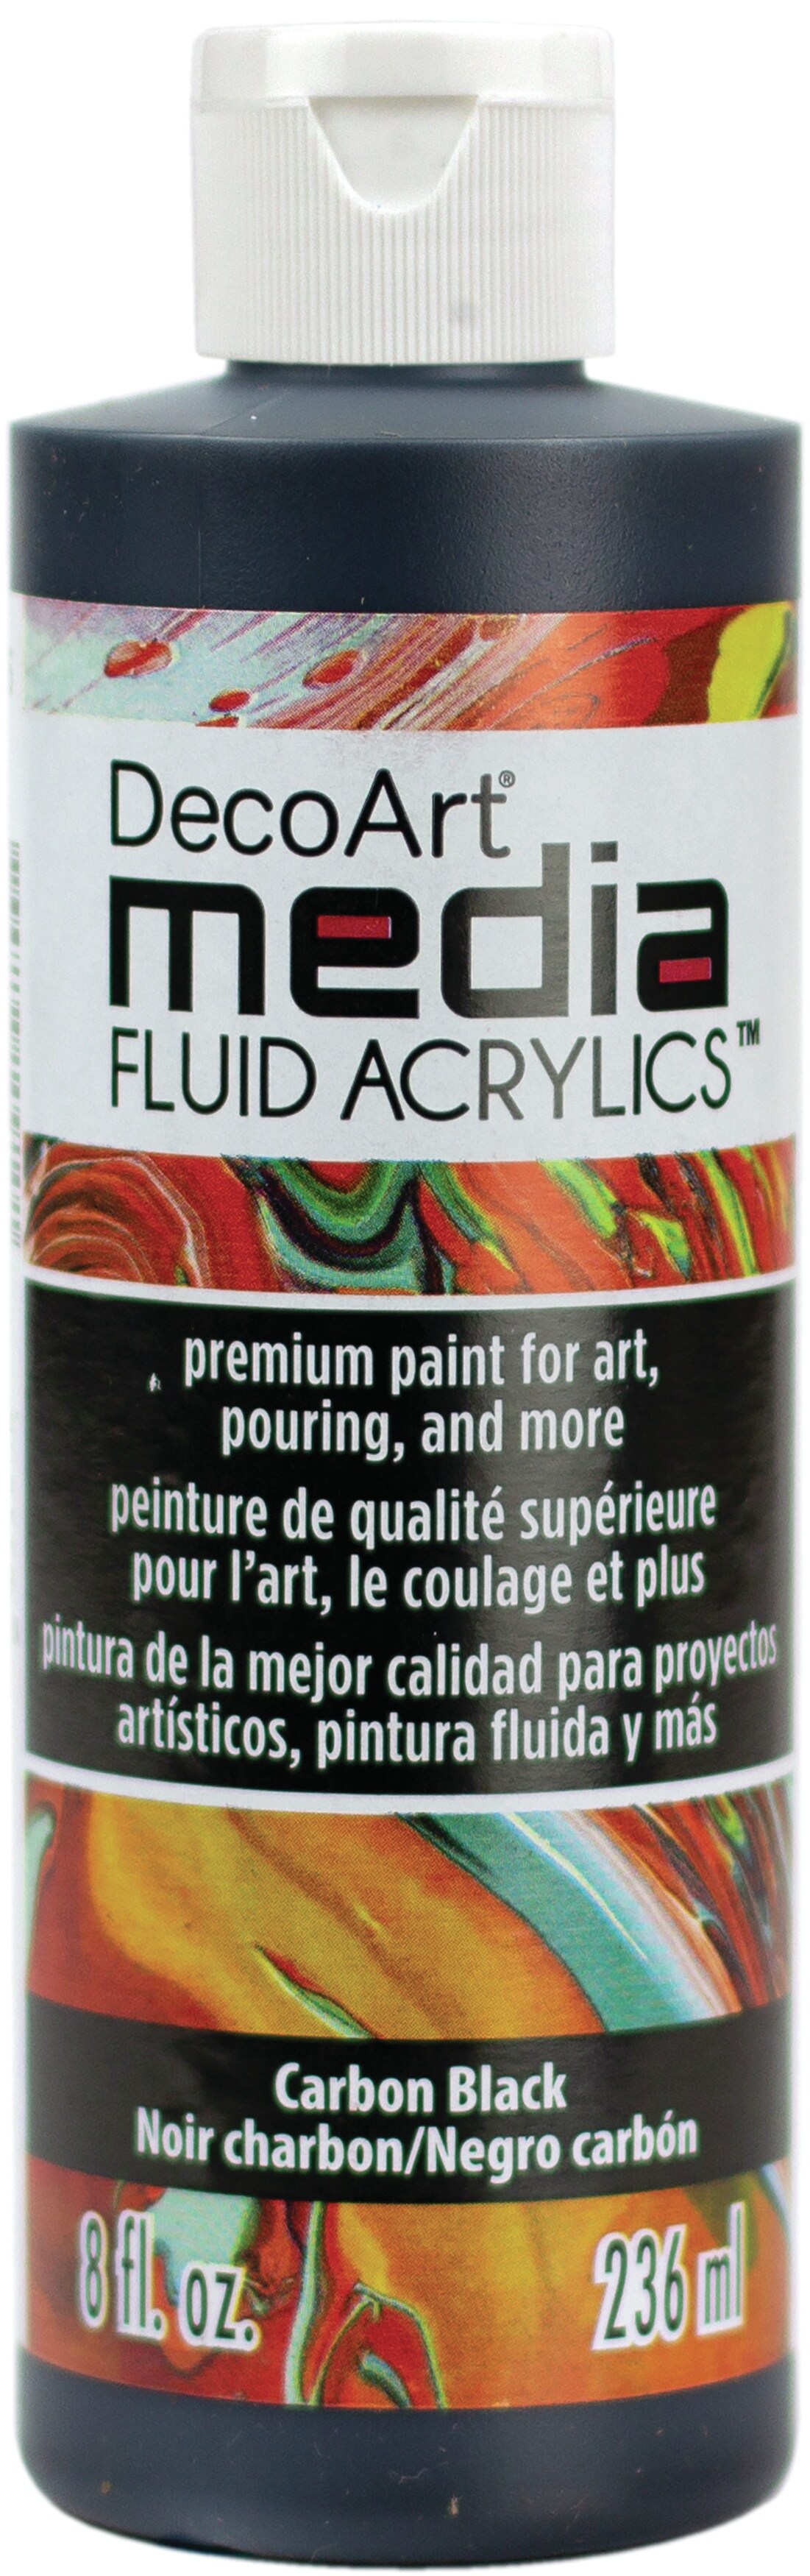 Decoart Media Fluid Acrylics Paint 8oz Carbon Black Accessories